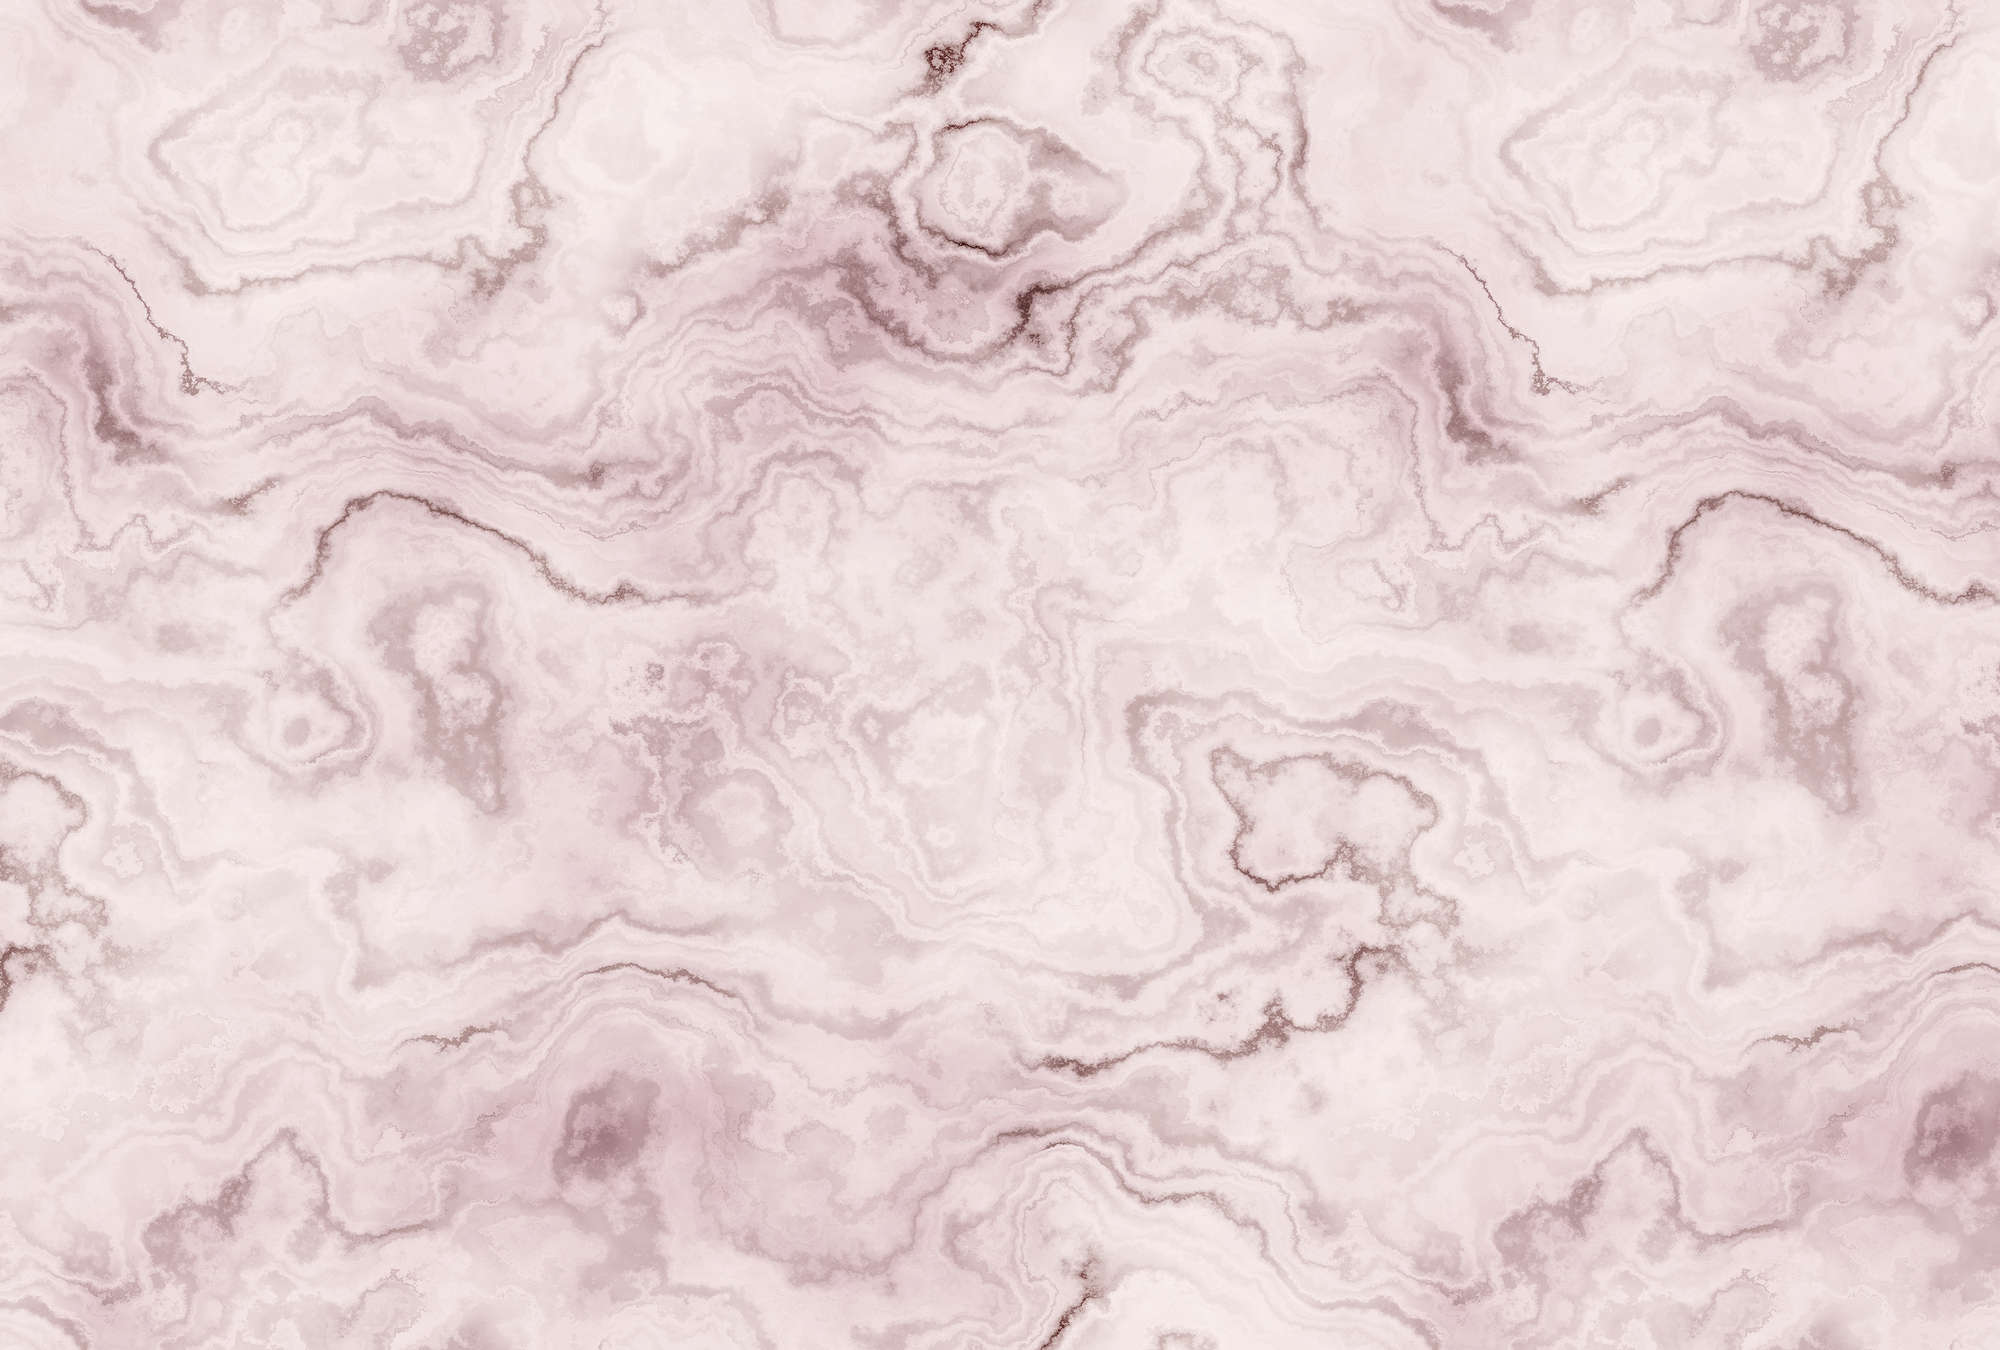             Carrara 3 - Fototapete in eleganter Marmoroptik – Rosa, Rot | Perlmutt Glattvlies
        